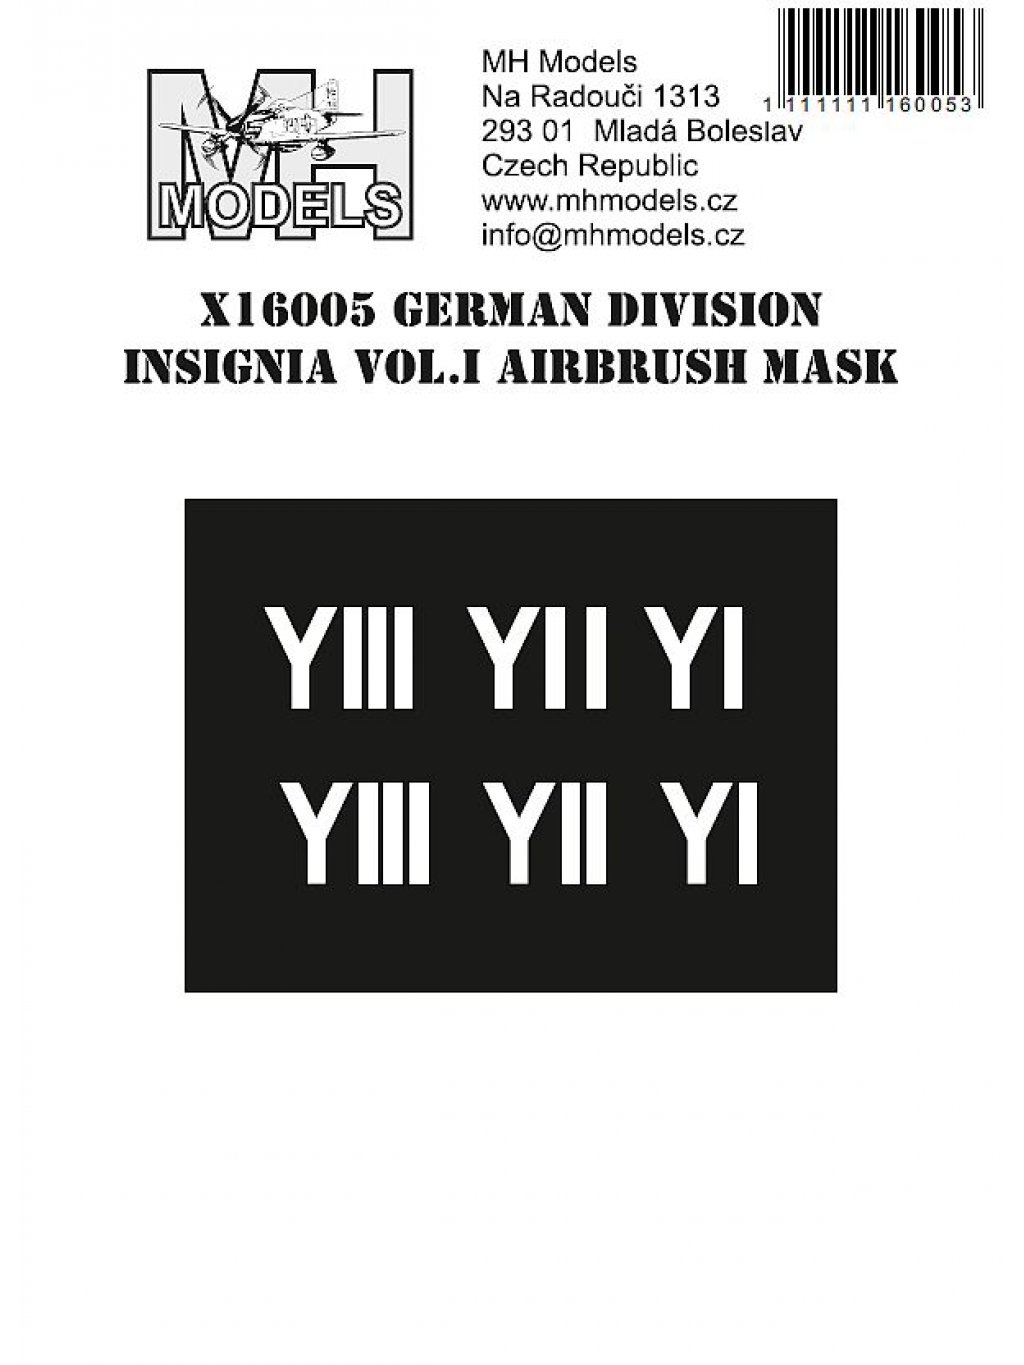 German division insignia vol.I airbrush mask